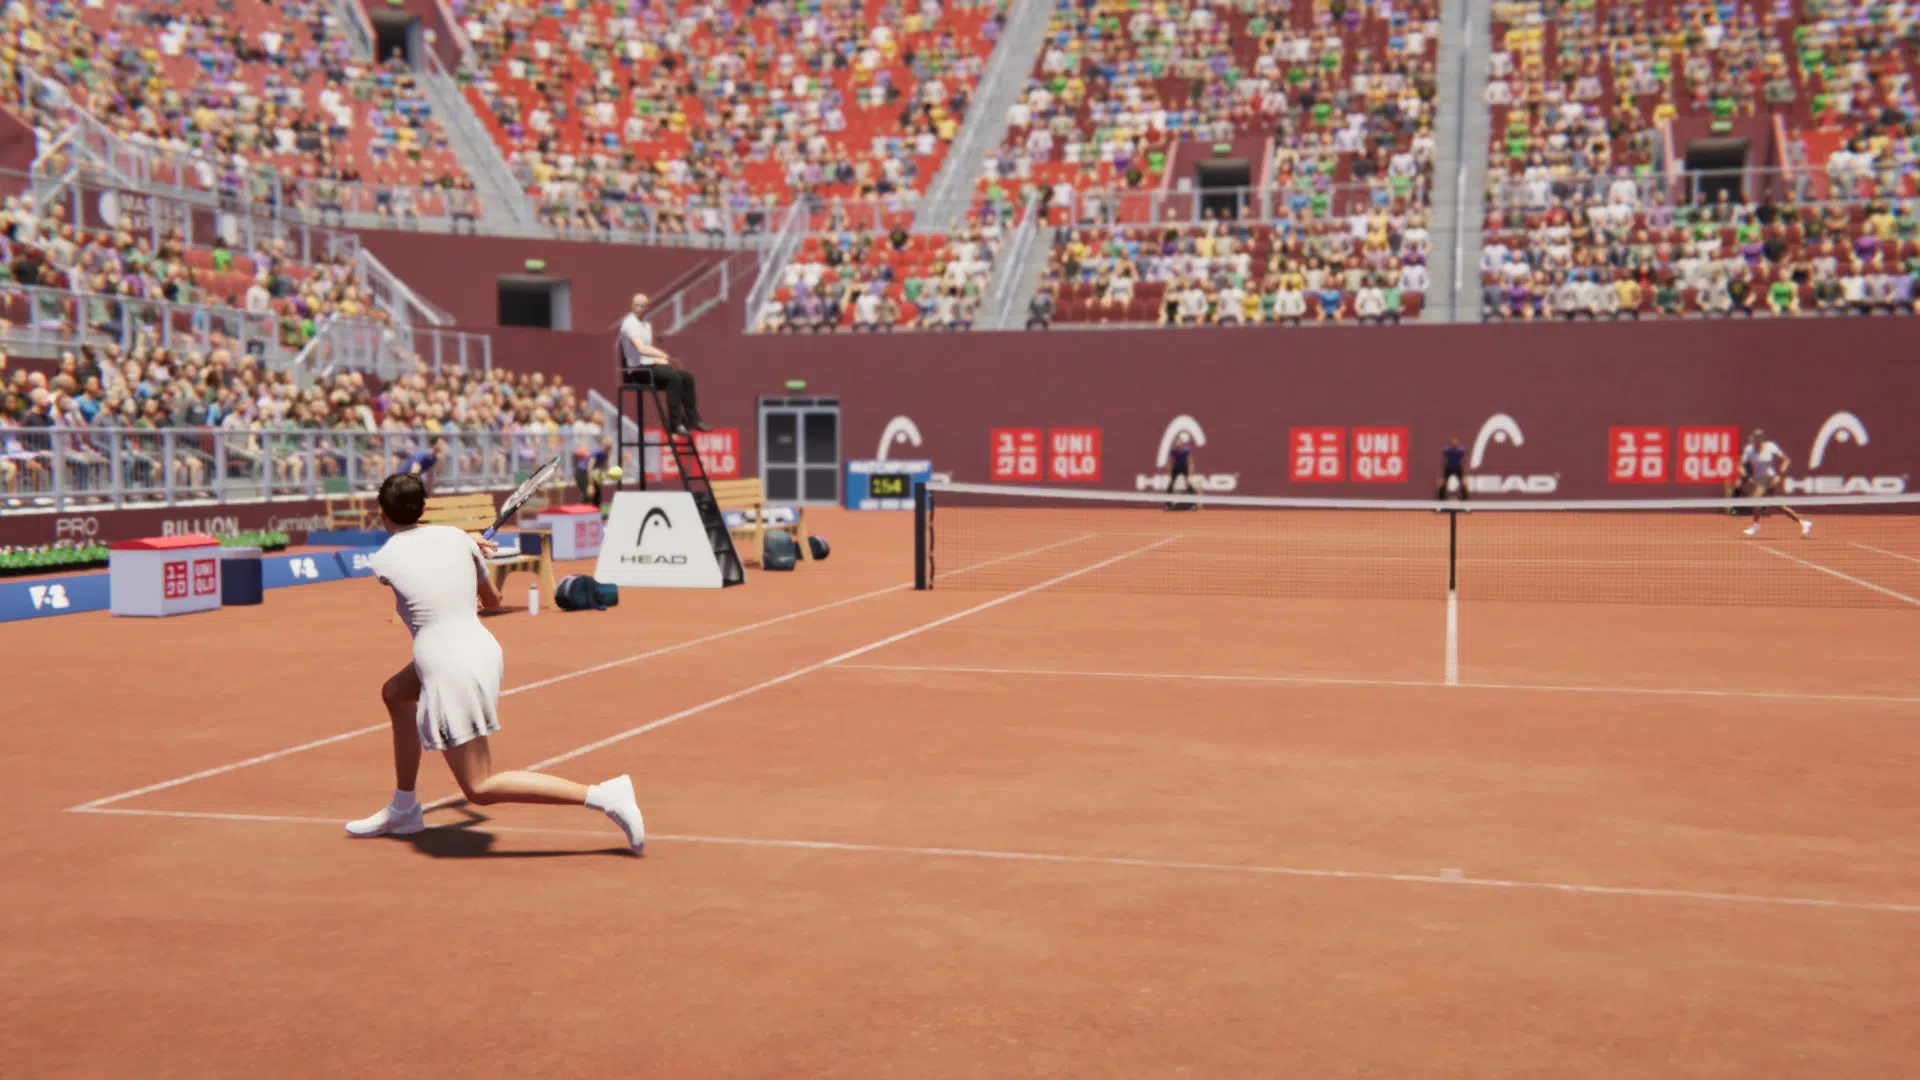 matchpoint tennis championships gameplay trailer